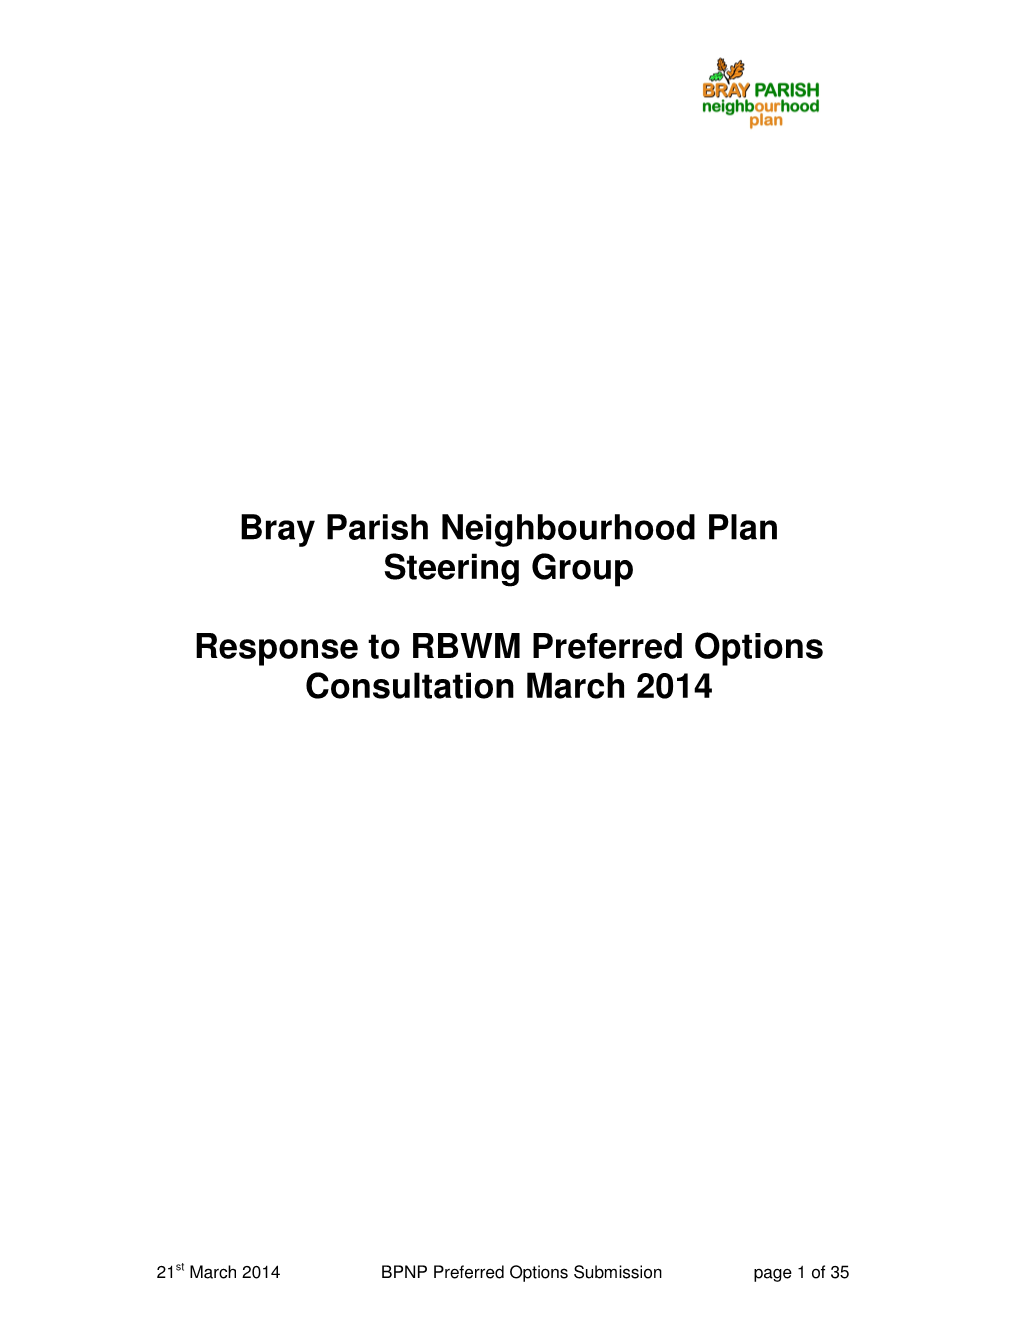 Bray Parish Neighbourhood Plan Steering Group Response To